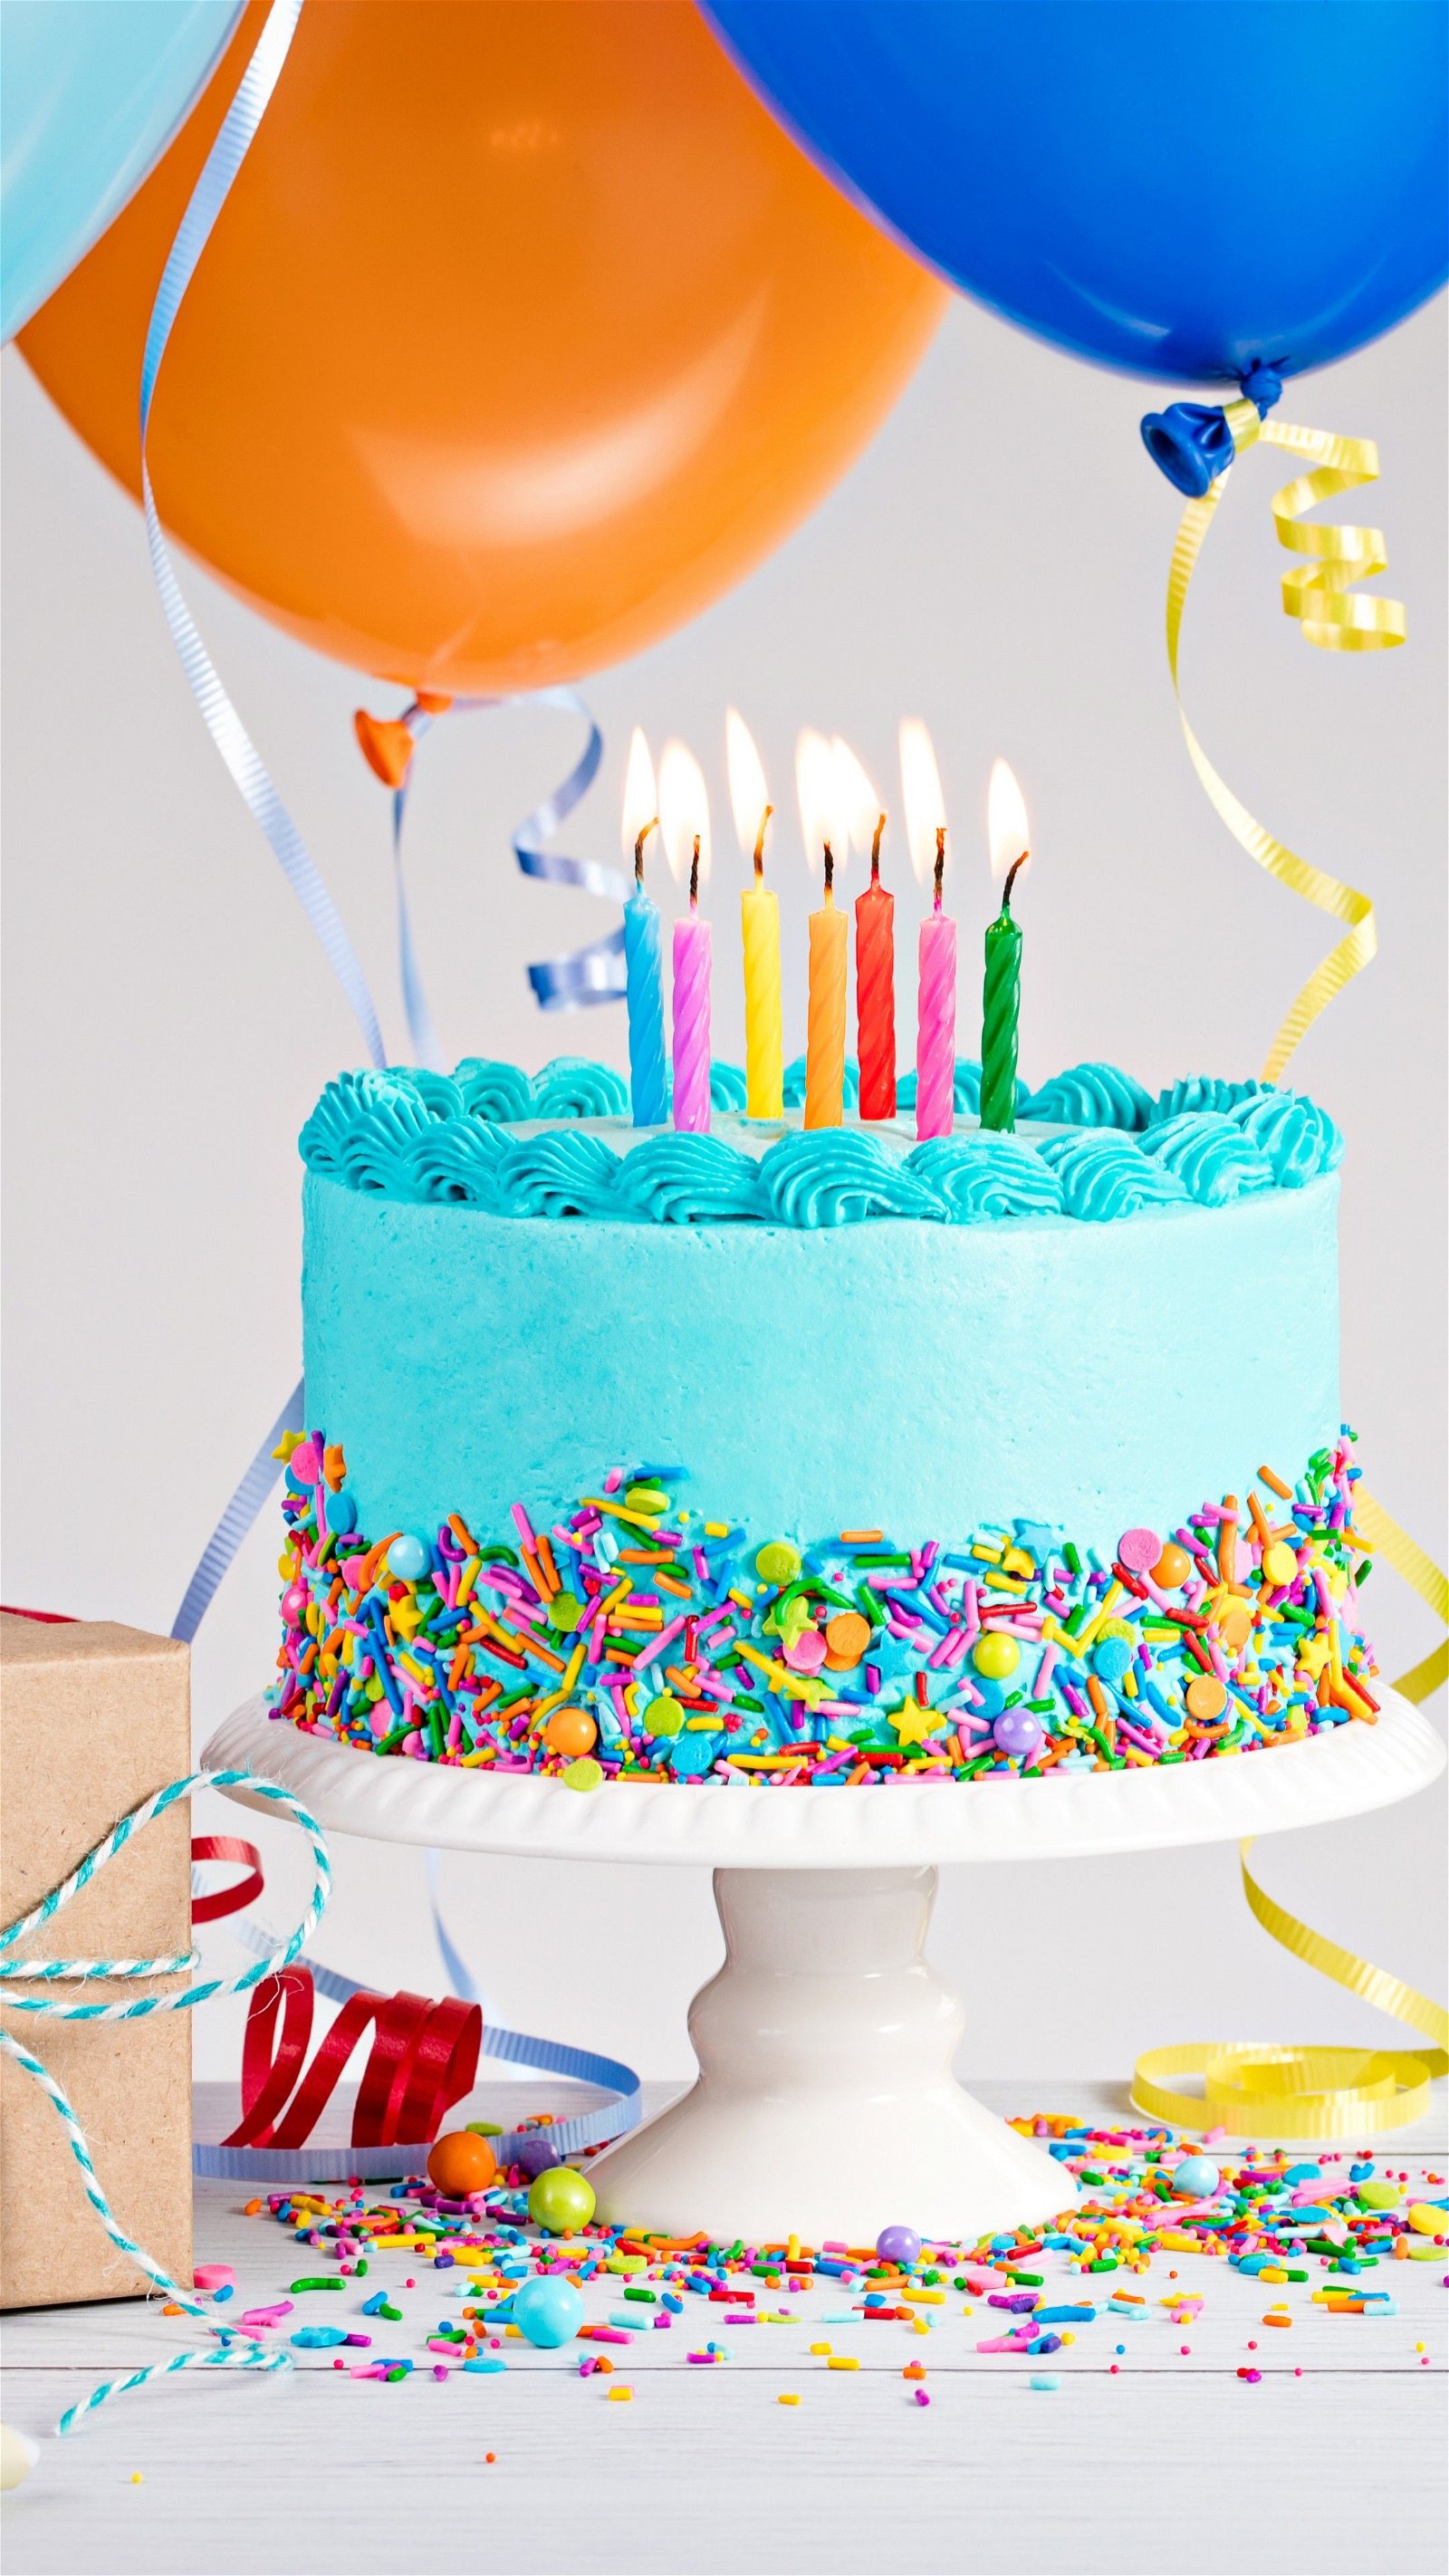 Free Birthday Cake Photos, Download Free Birthday Cake Photos png images,  Free ClipArts on Clipart Library